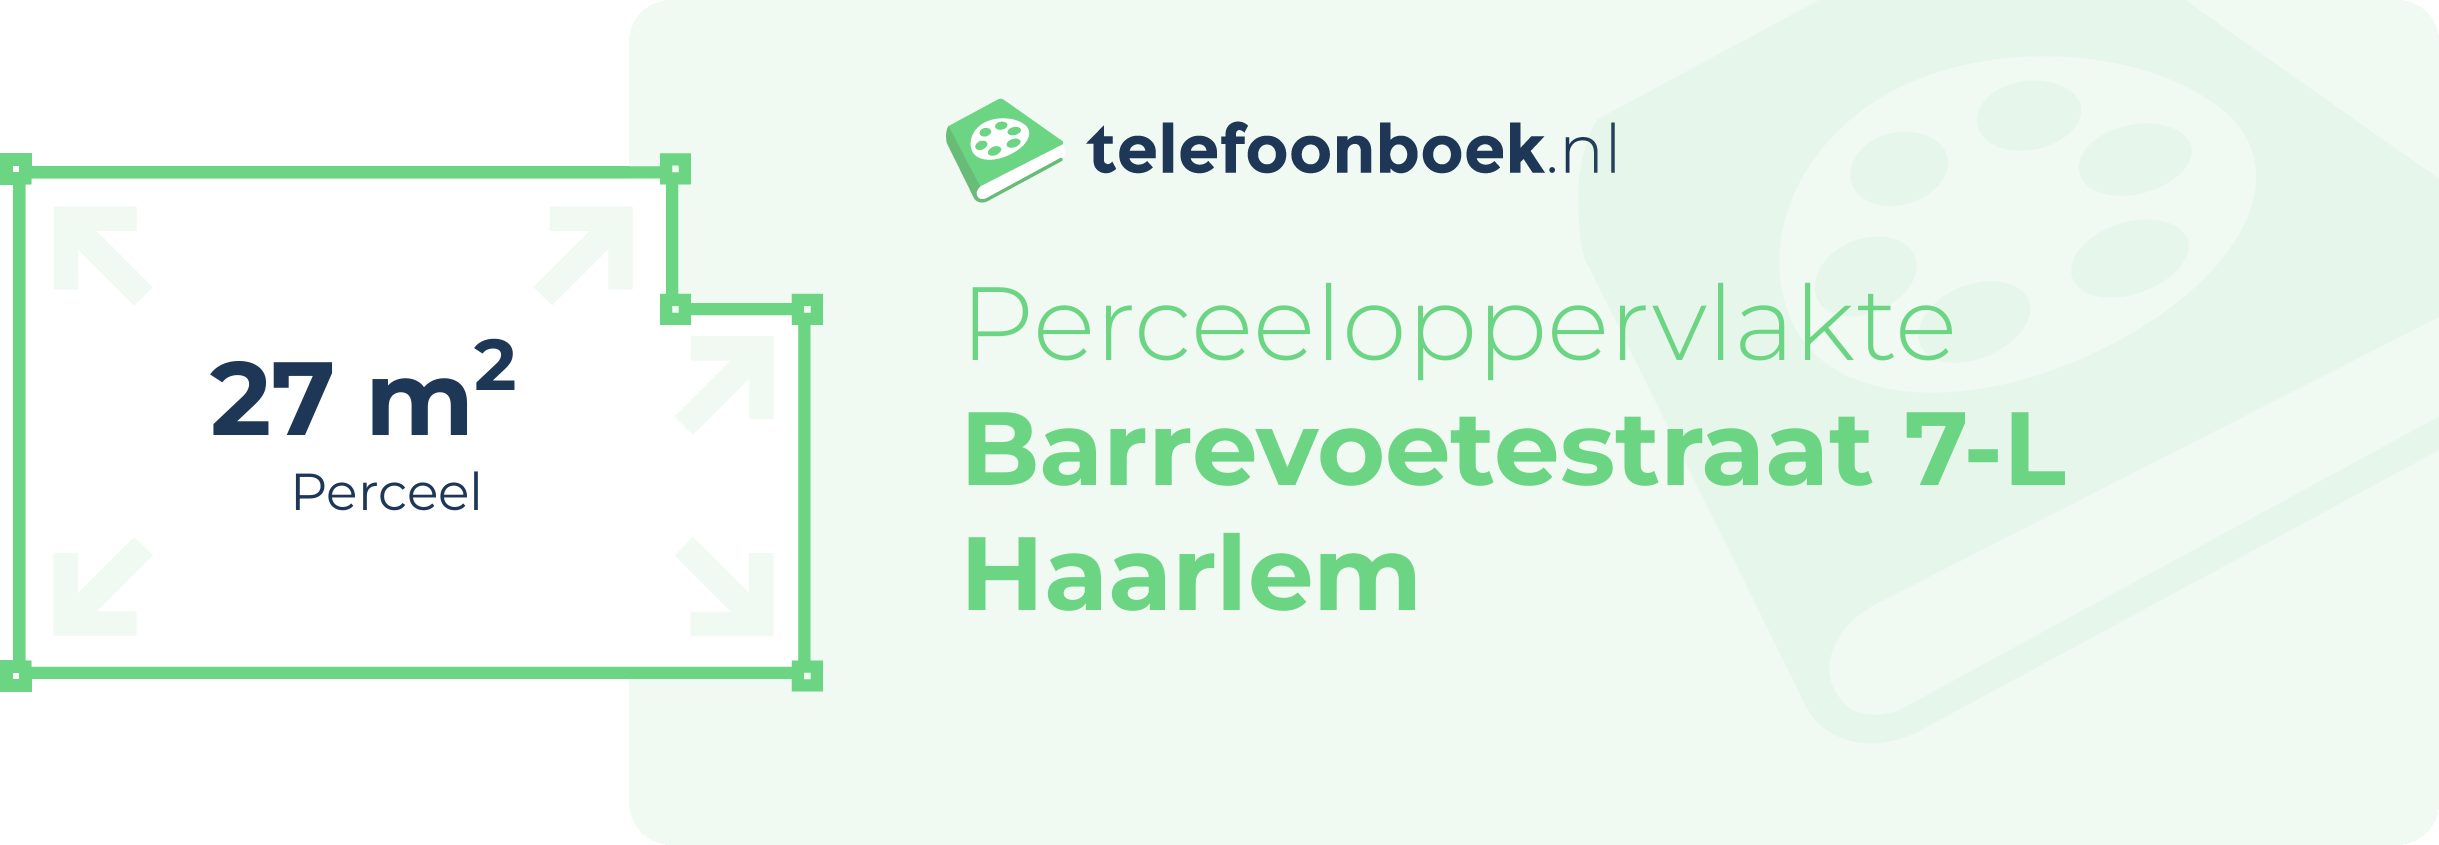 Perceeloppervlakte Barrevoetestraat 7-L Haarlem